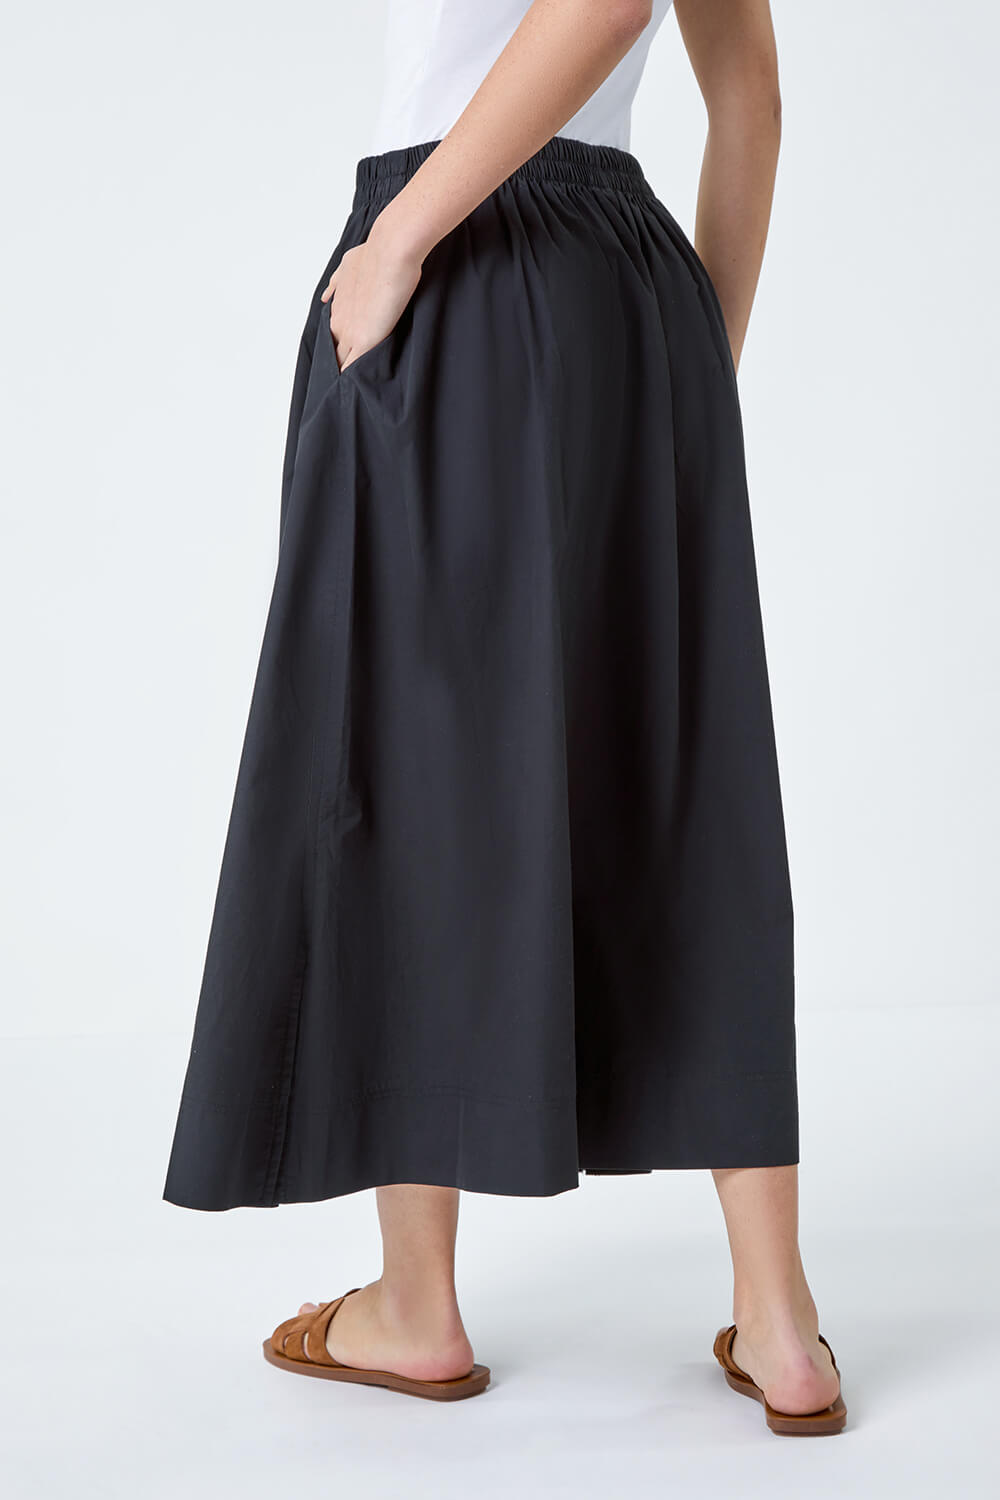 Black Cotton Poplin Pocket Skirt, Image 3 of 5